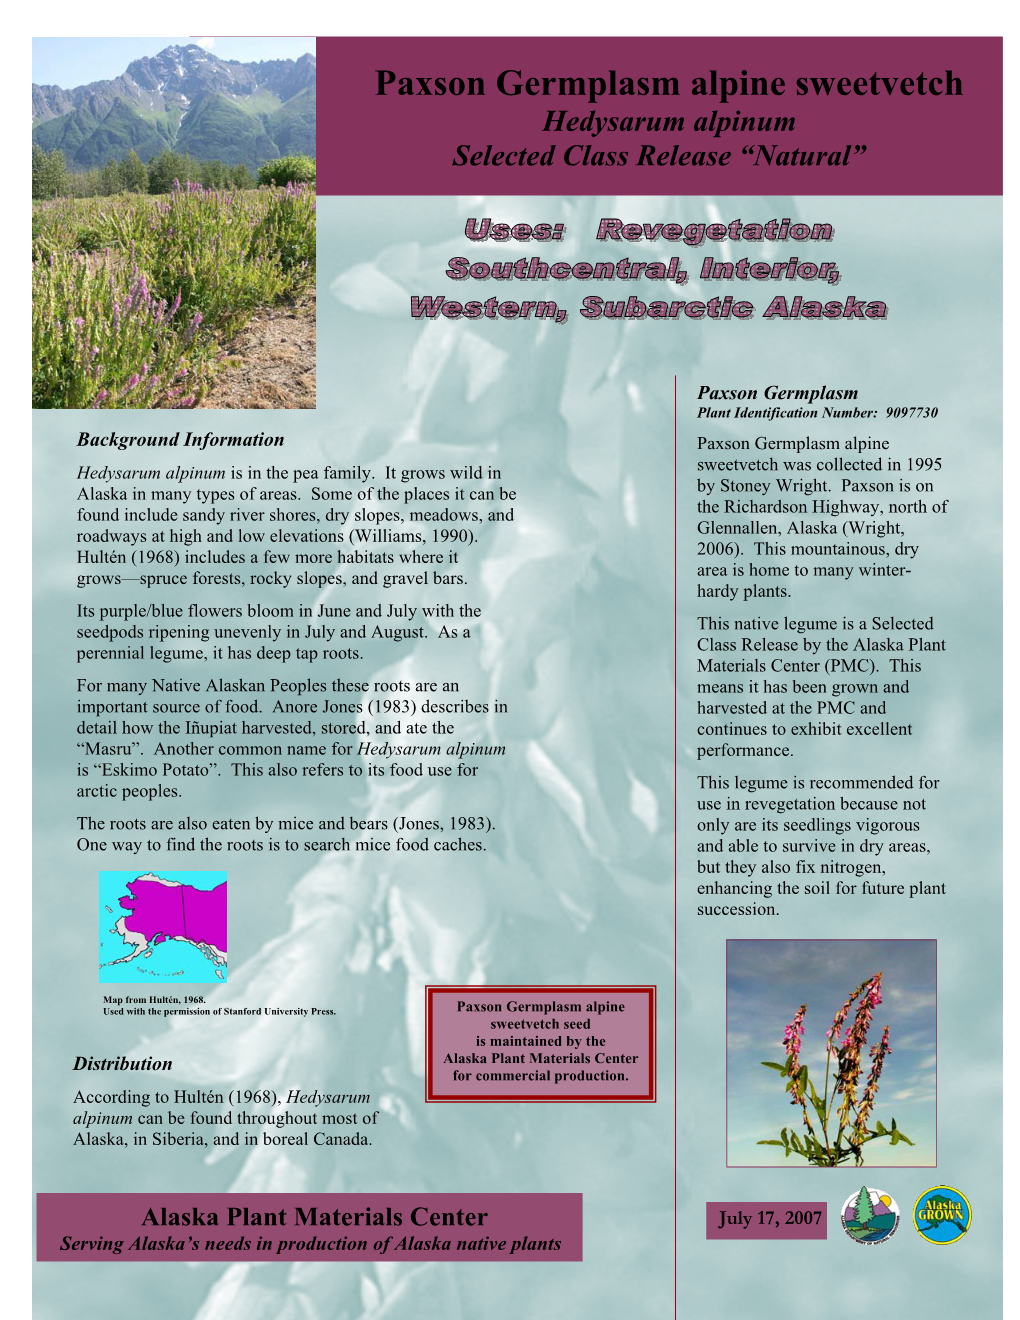 Paxson Germplasm Alpine Sweetvetch Hedysarum Alpinum Selected Class Release “Natural”